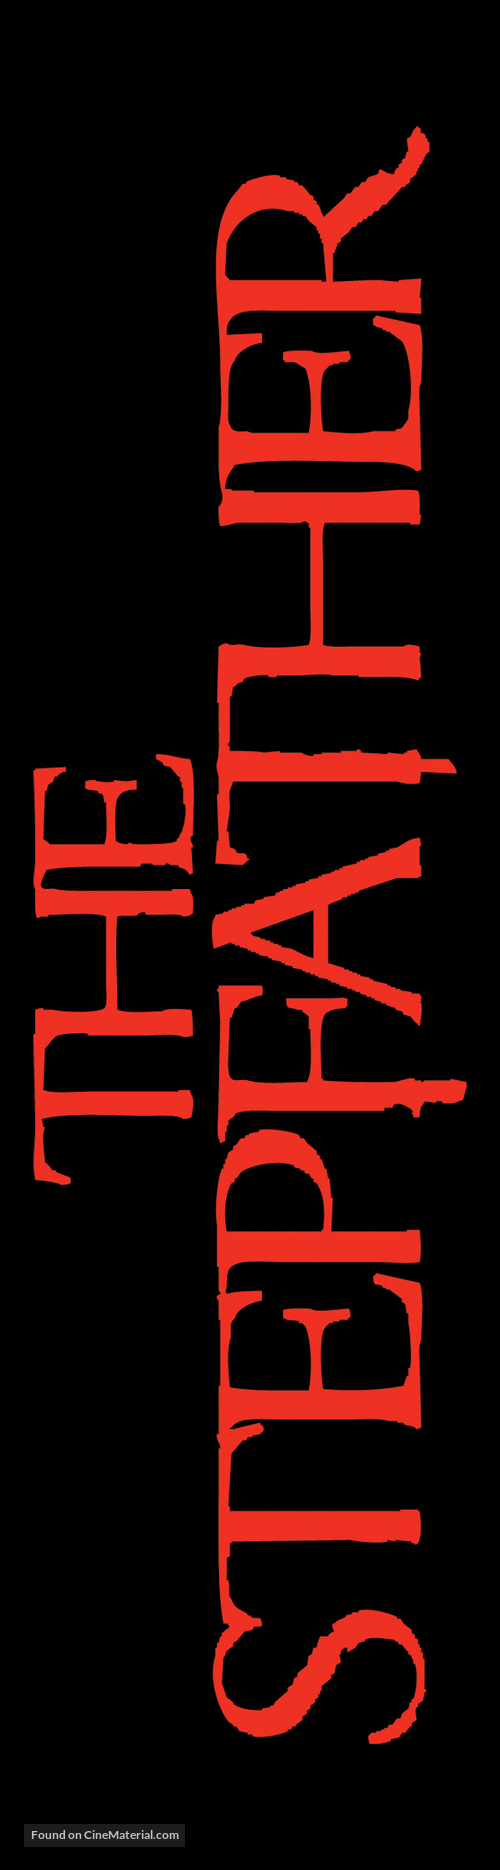 The Stepfather - Logo